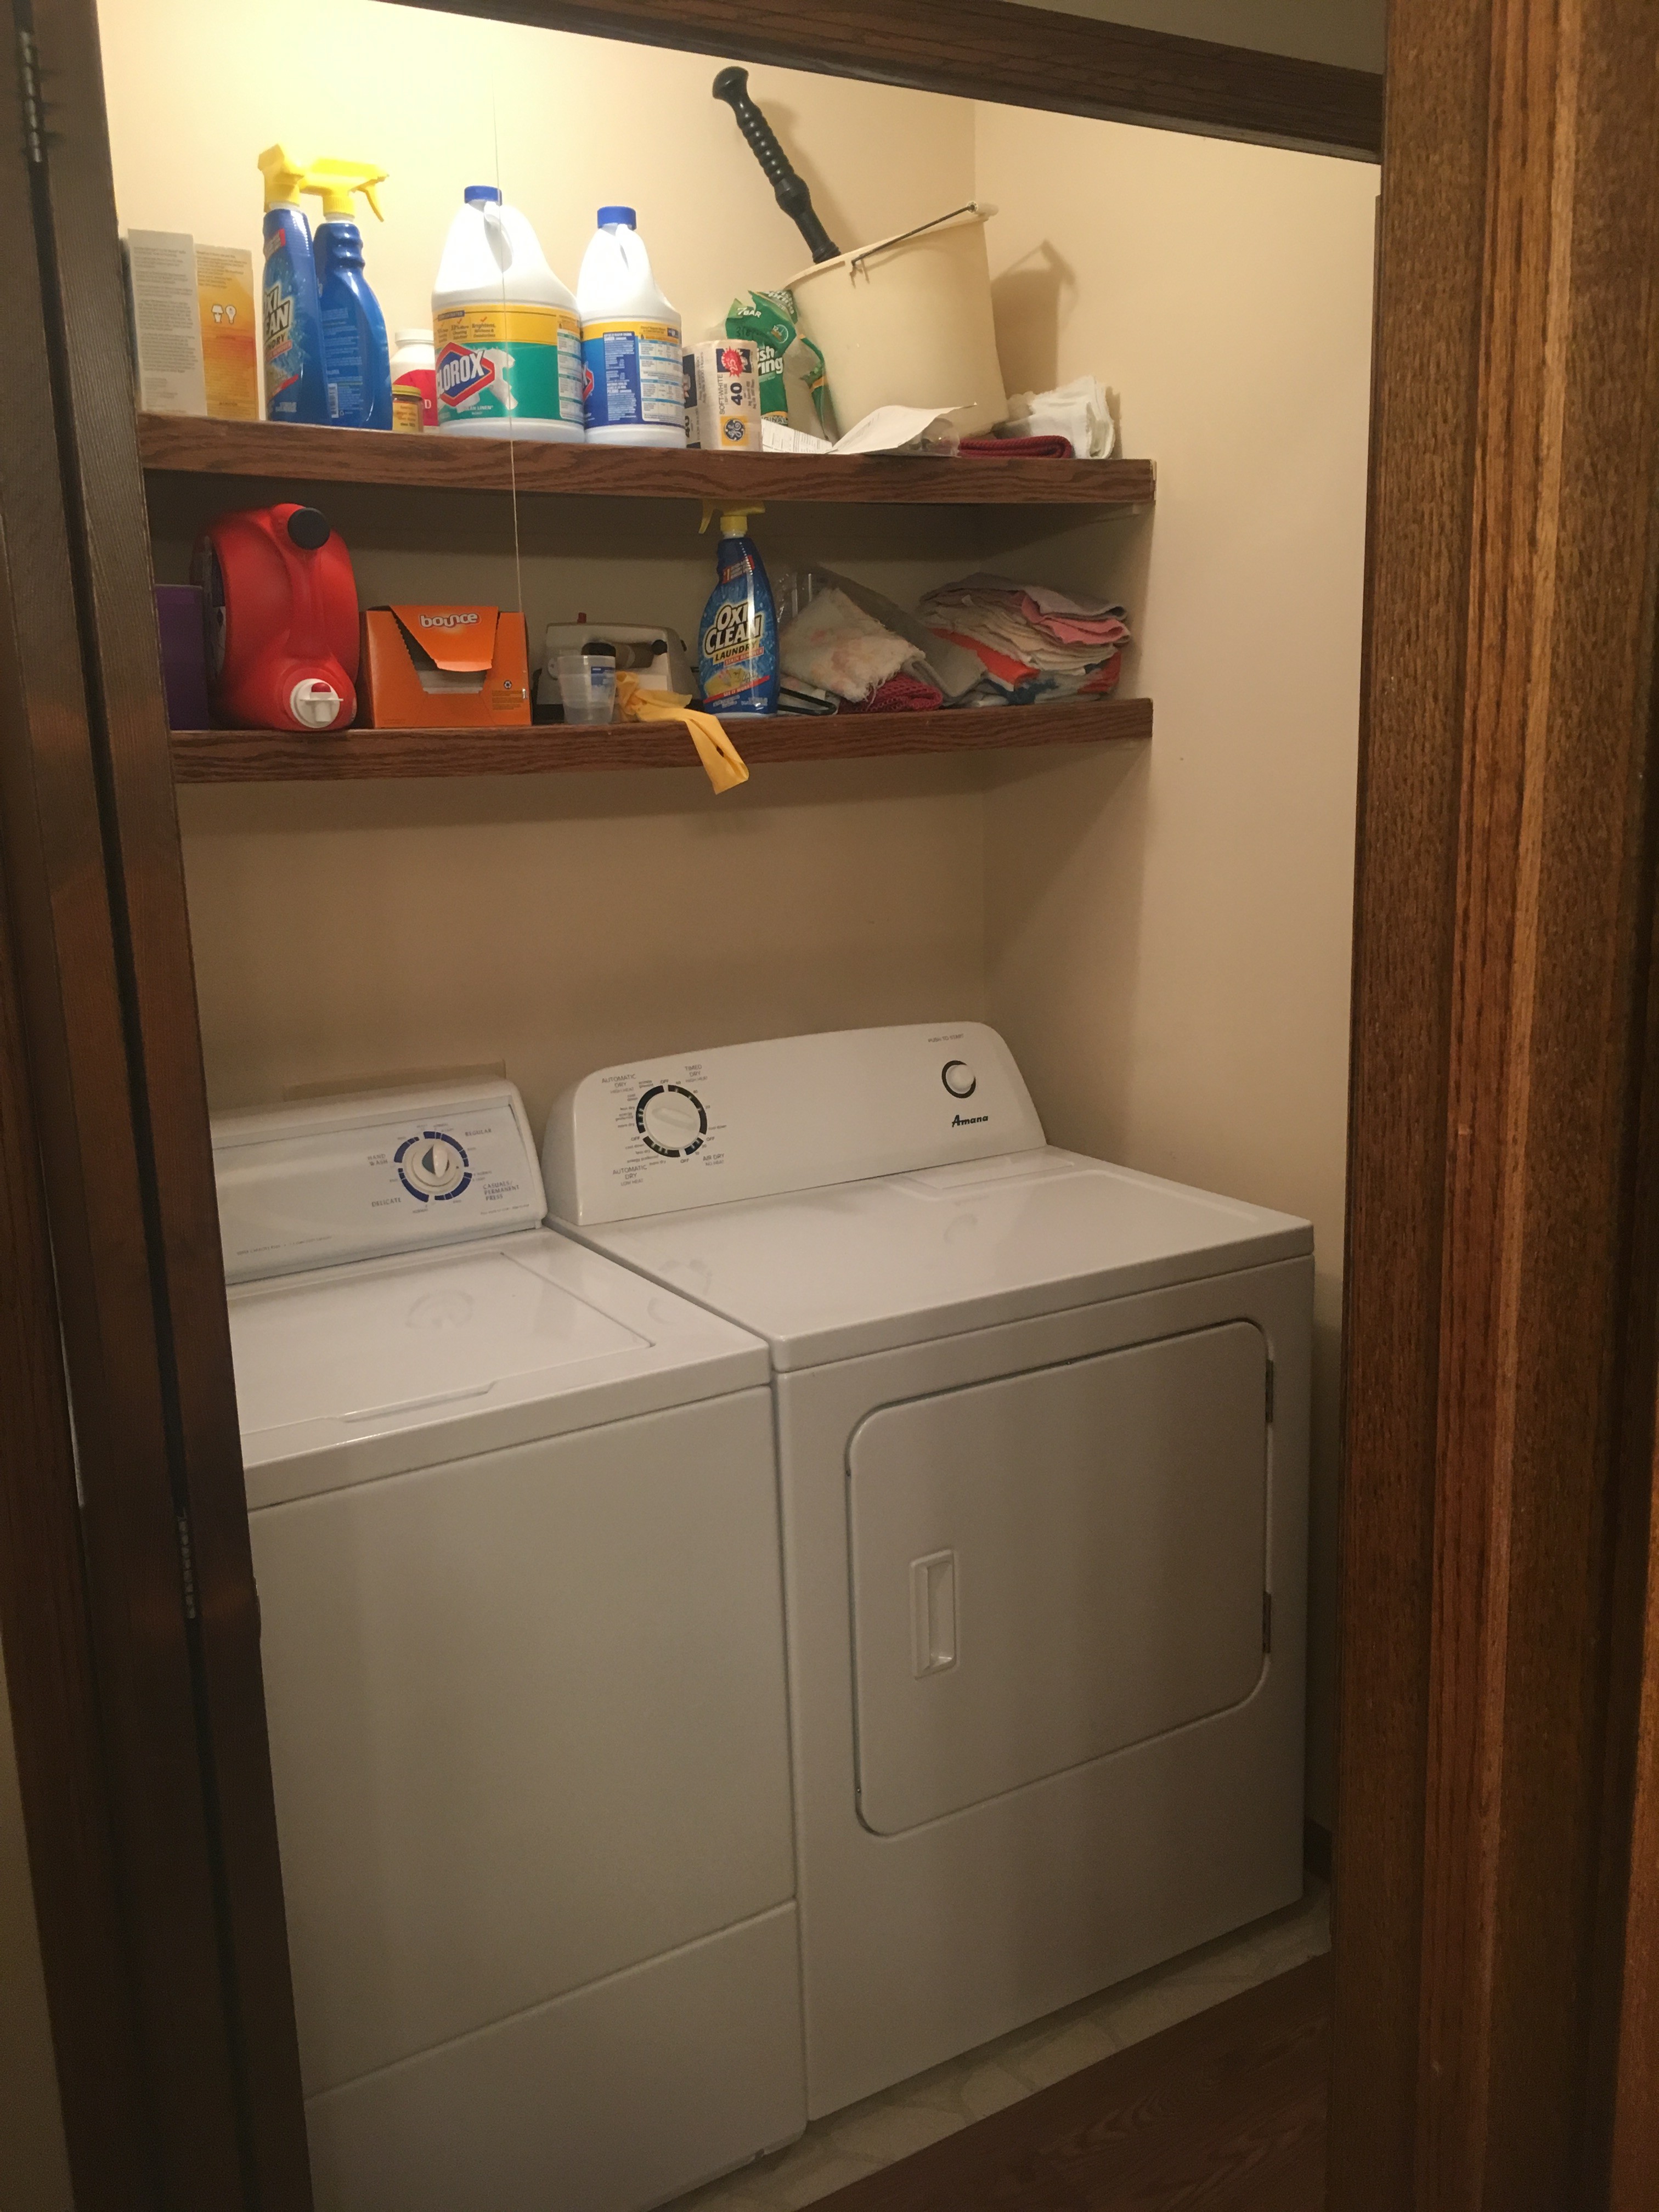 Washer/dryer in hall closet